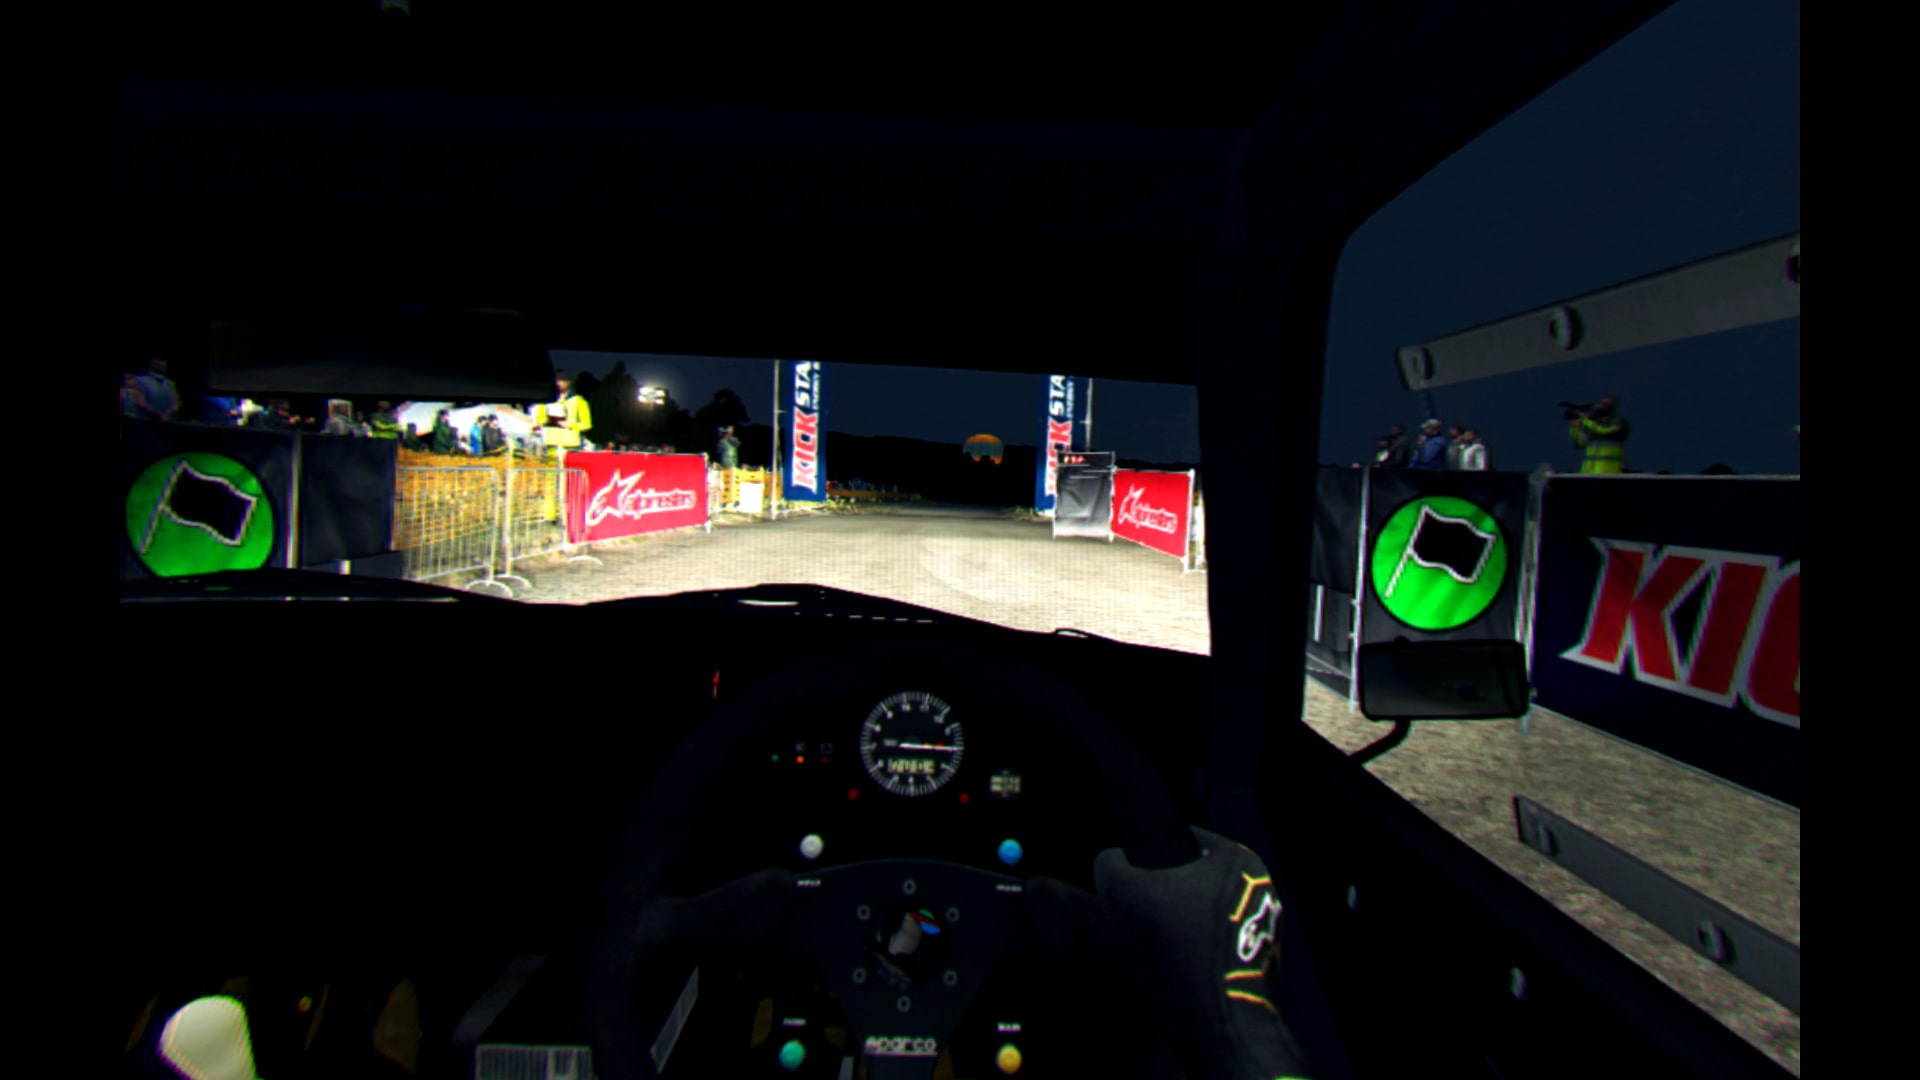 Ps4 Dirt Rally VR game menu VR DLC. Ps4 Dirt Rally 2015 VR game menu VR DLC.